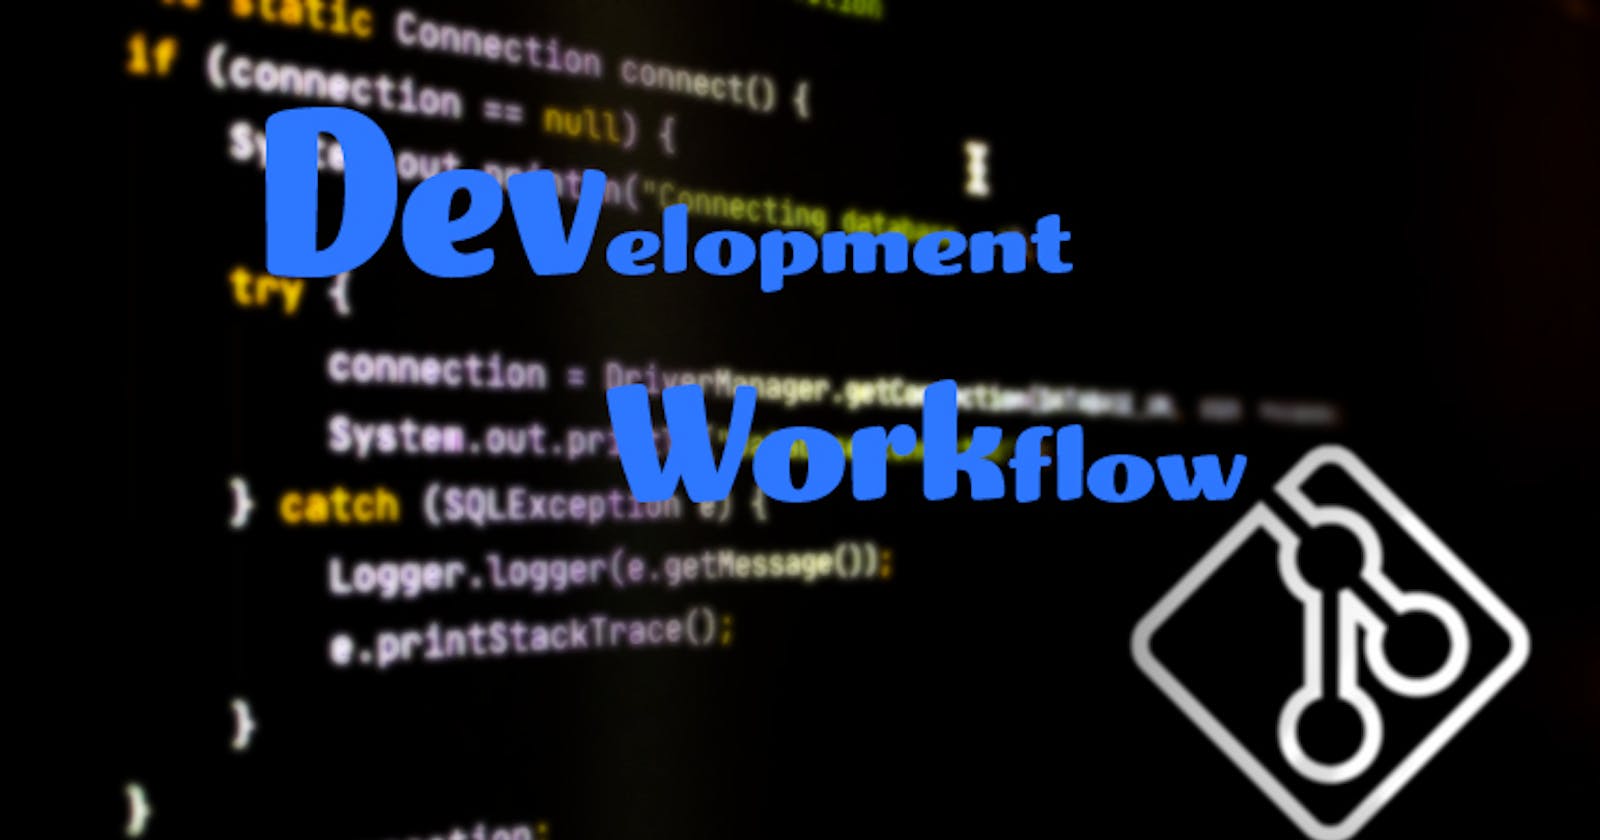 My development workflow